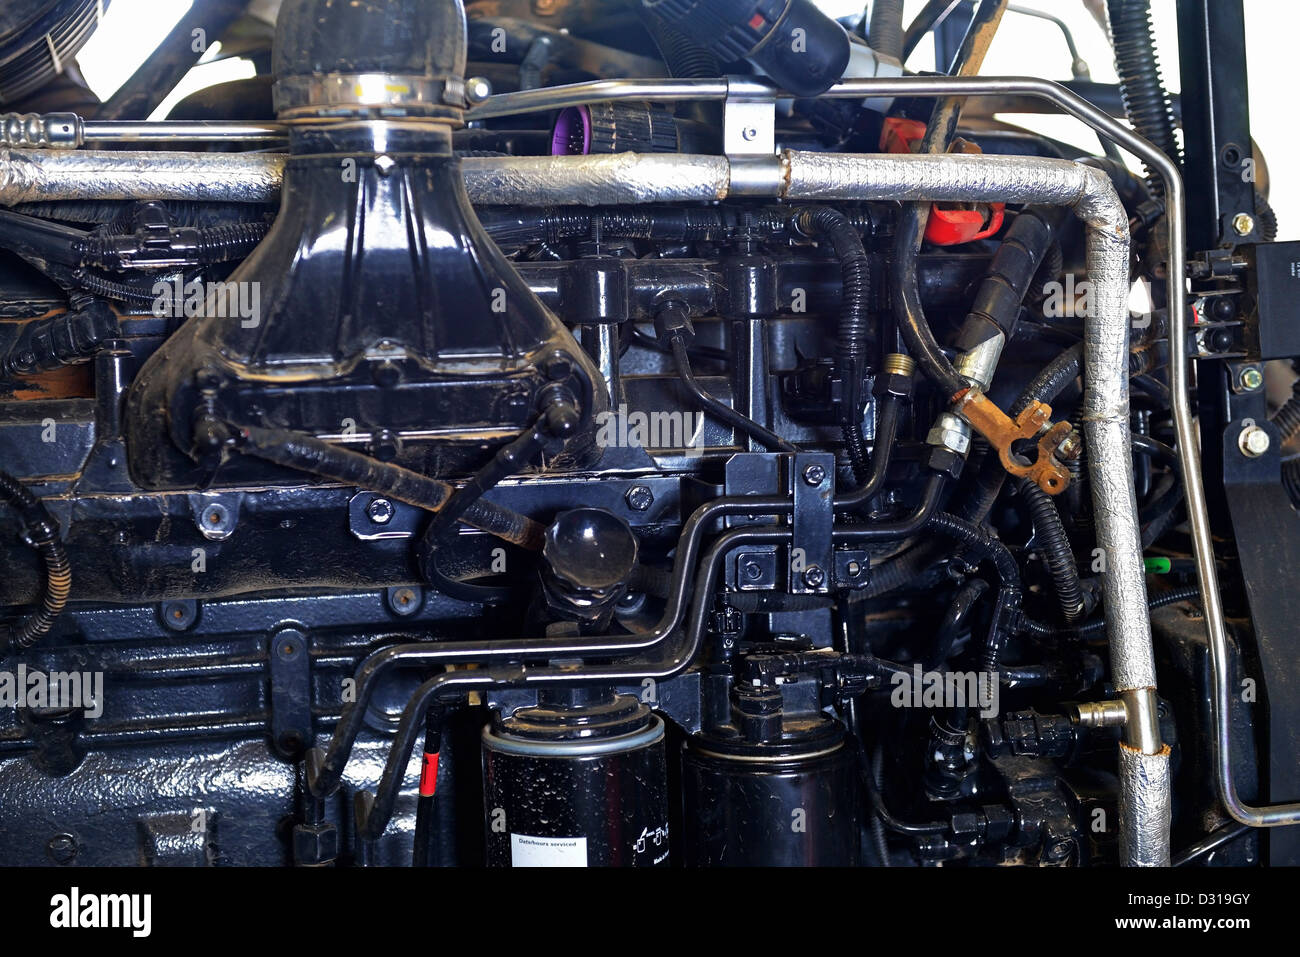 Tractor engine Stock Photo